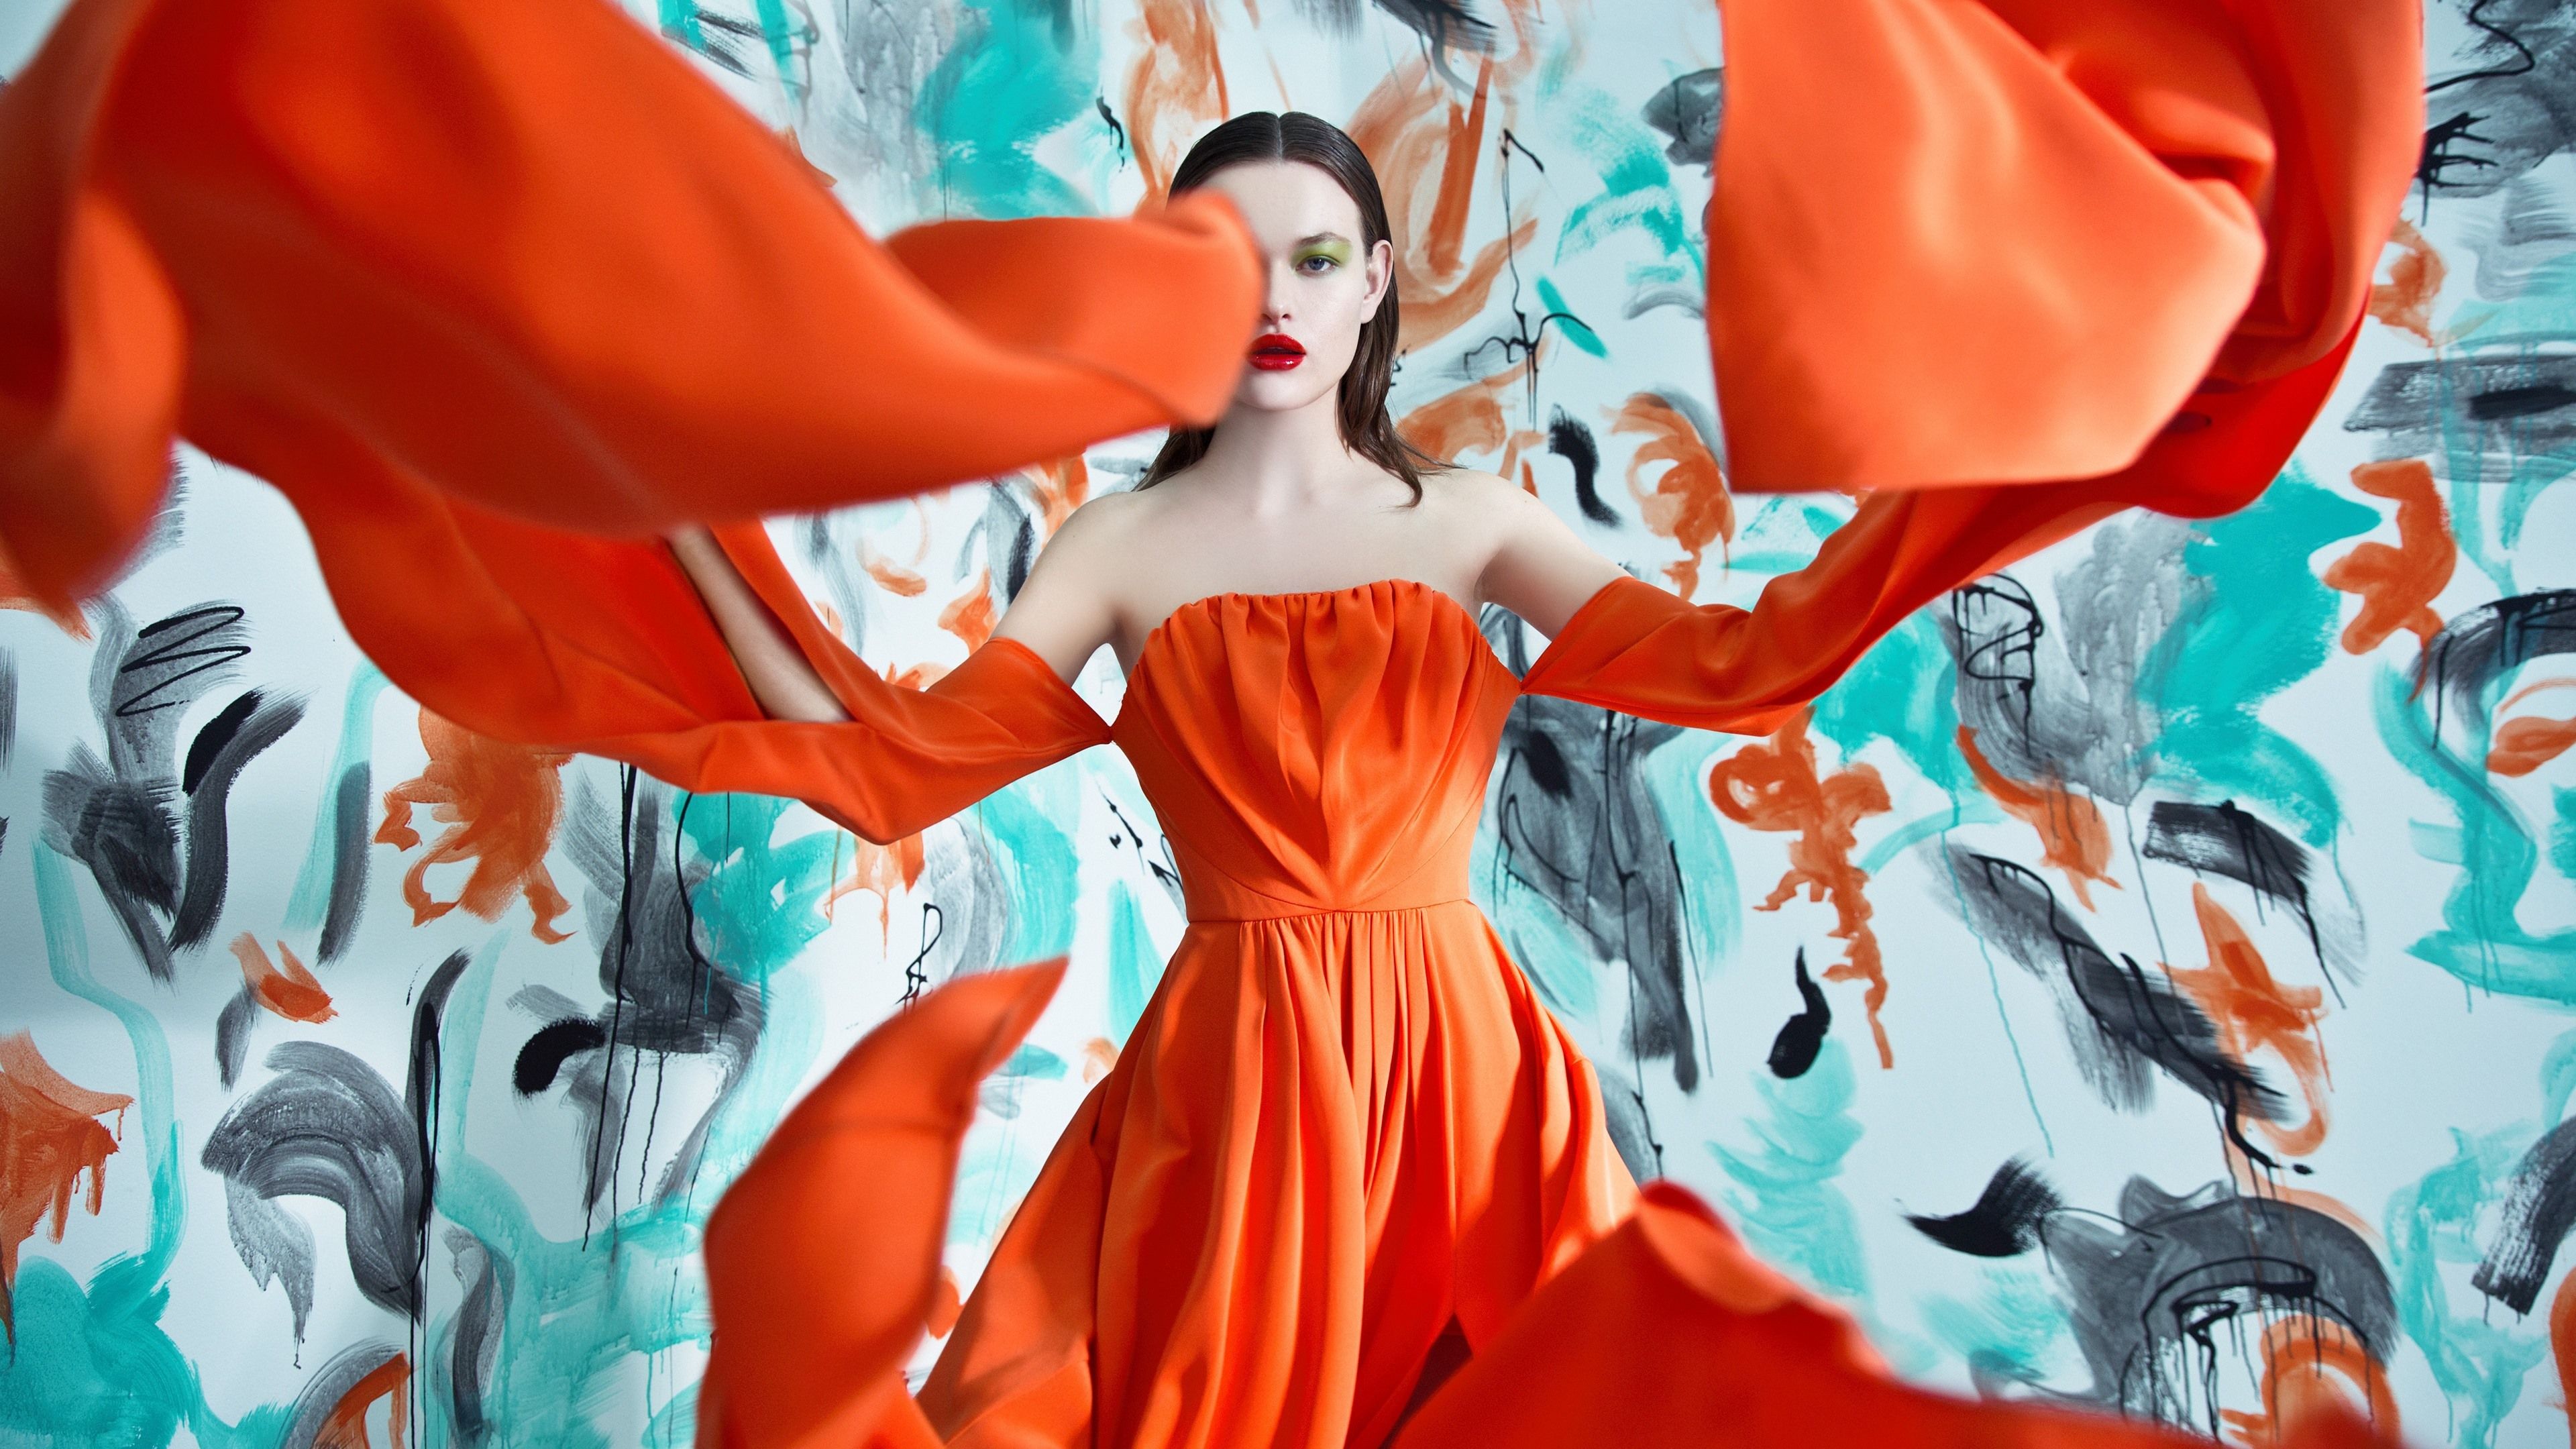 Wallpaper Fashion girl, orange skirt, art photography 3840x2160 UHD 4K Picture, Image